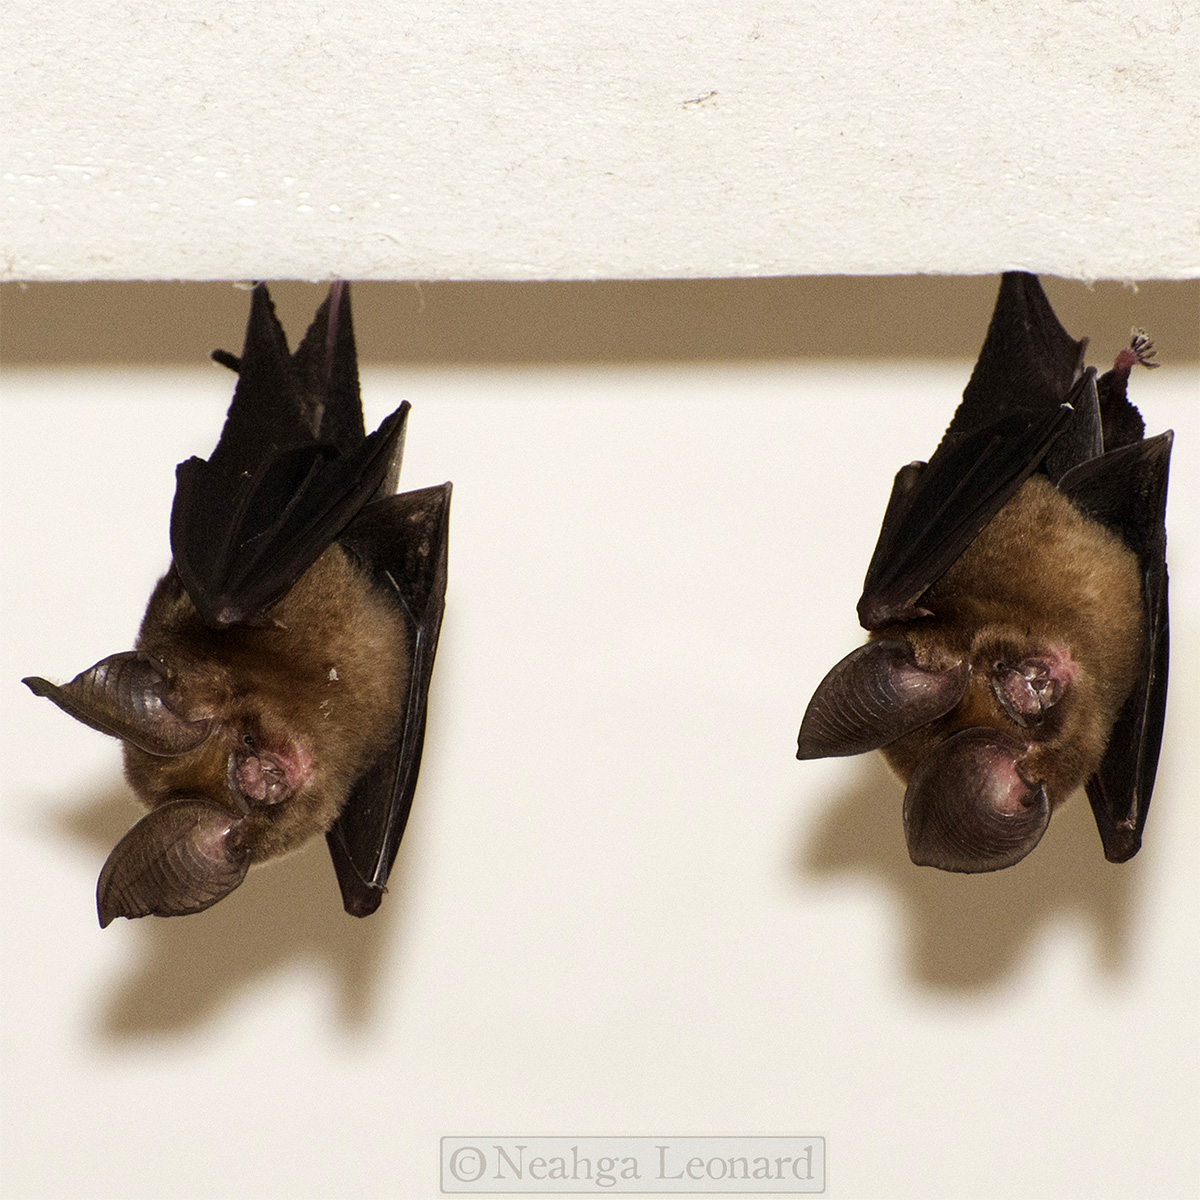 Phou Khao Khouay Leaf Nosed Bat (Hipposideros khaokhouayensis) Фото №2